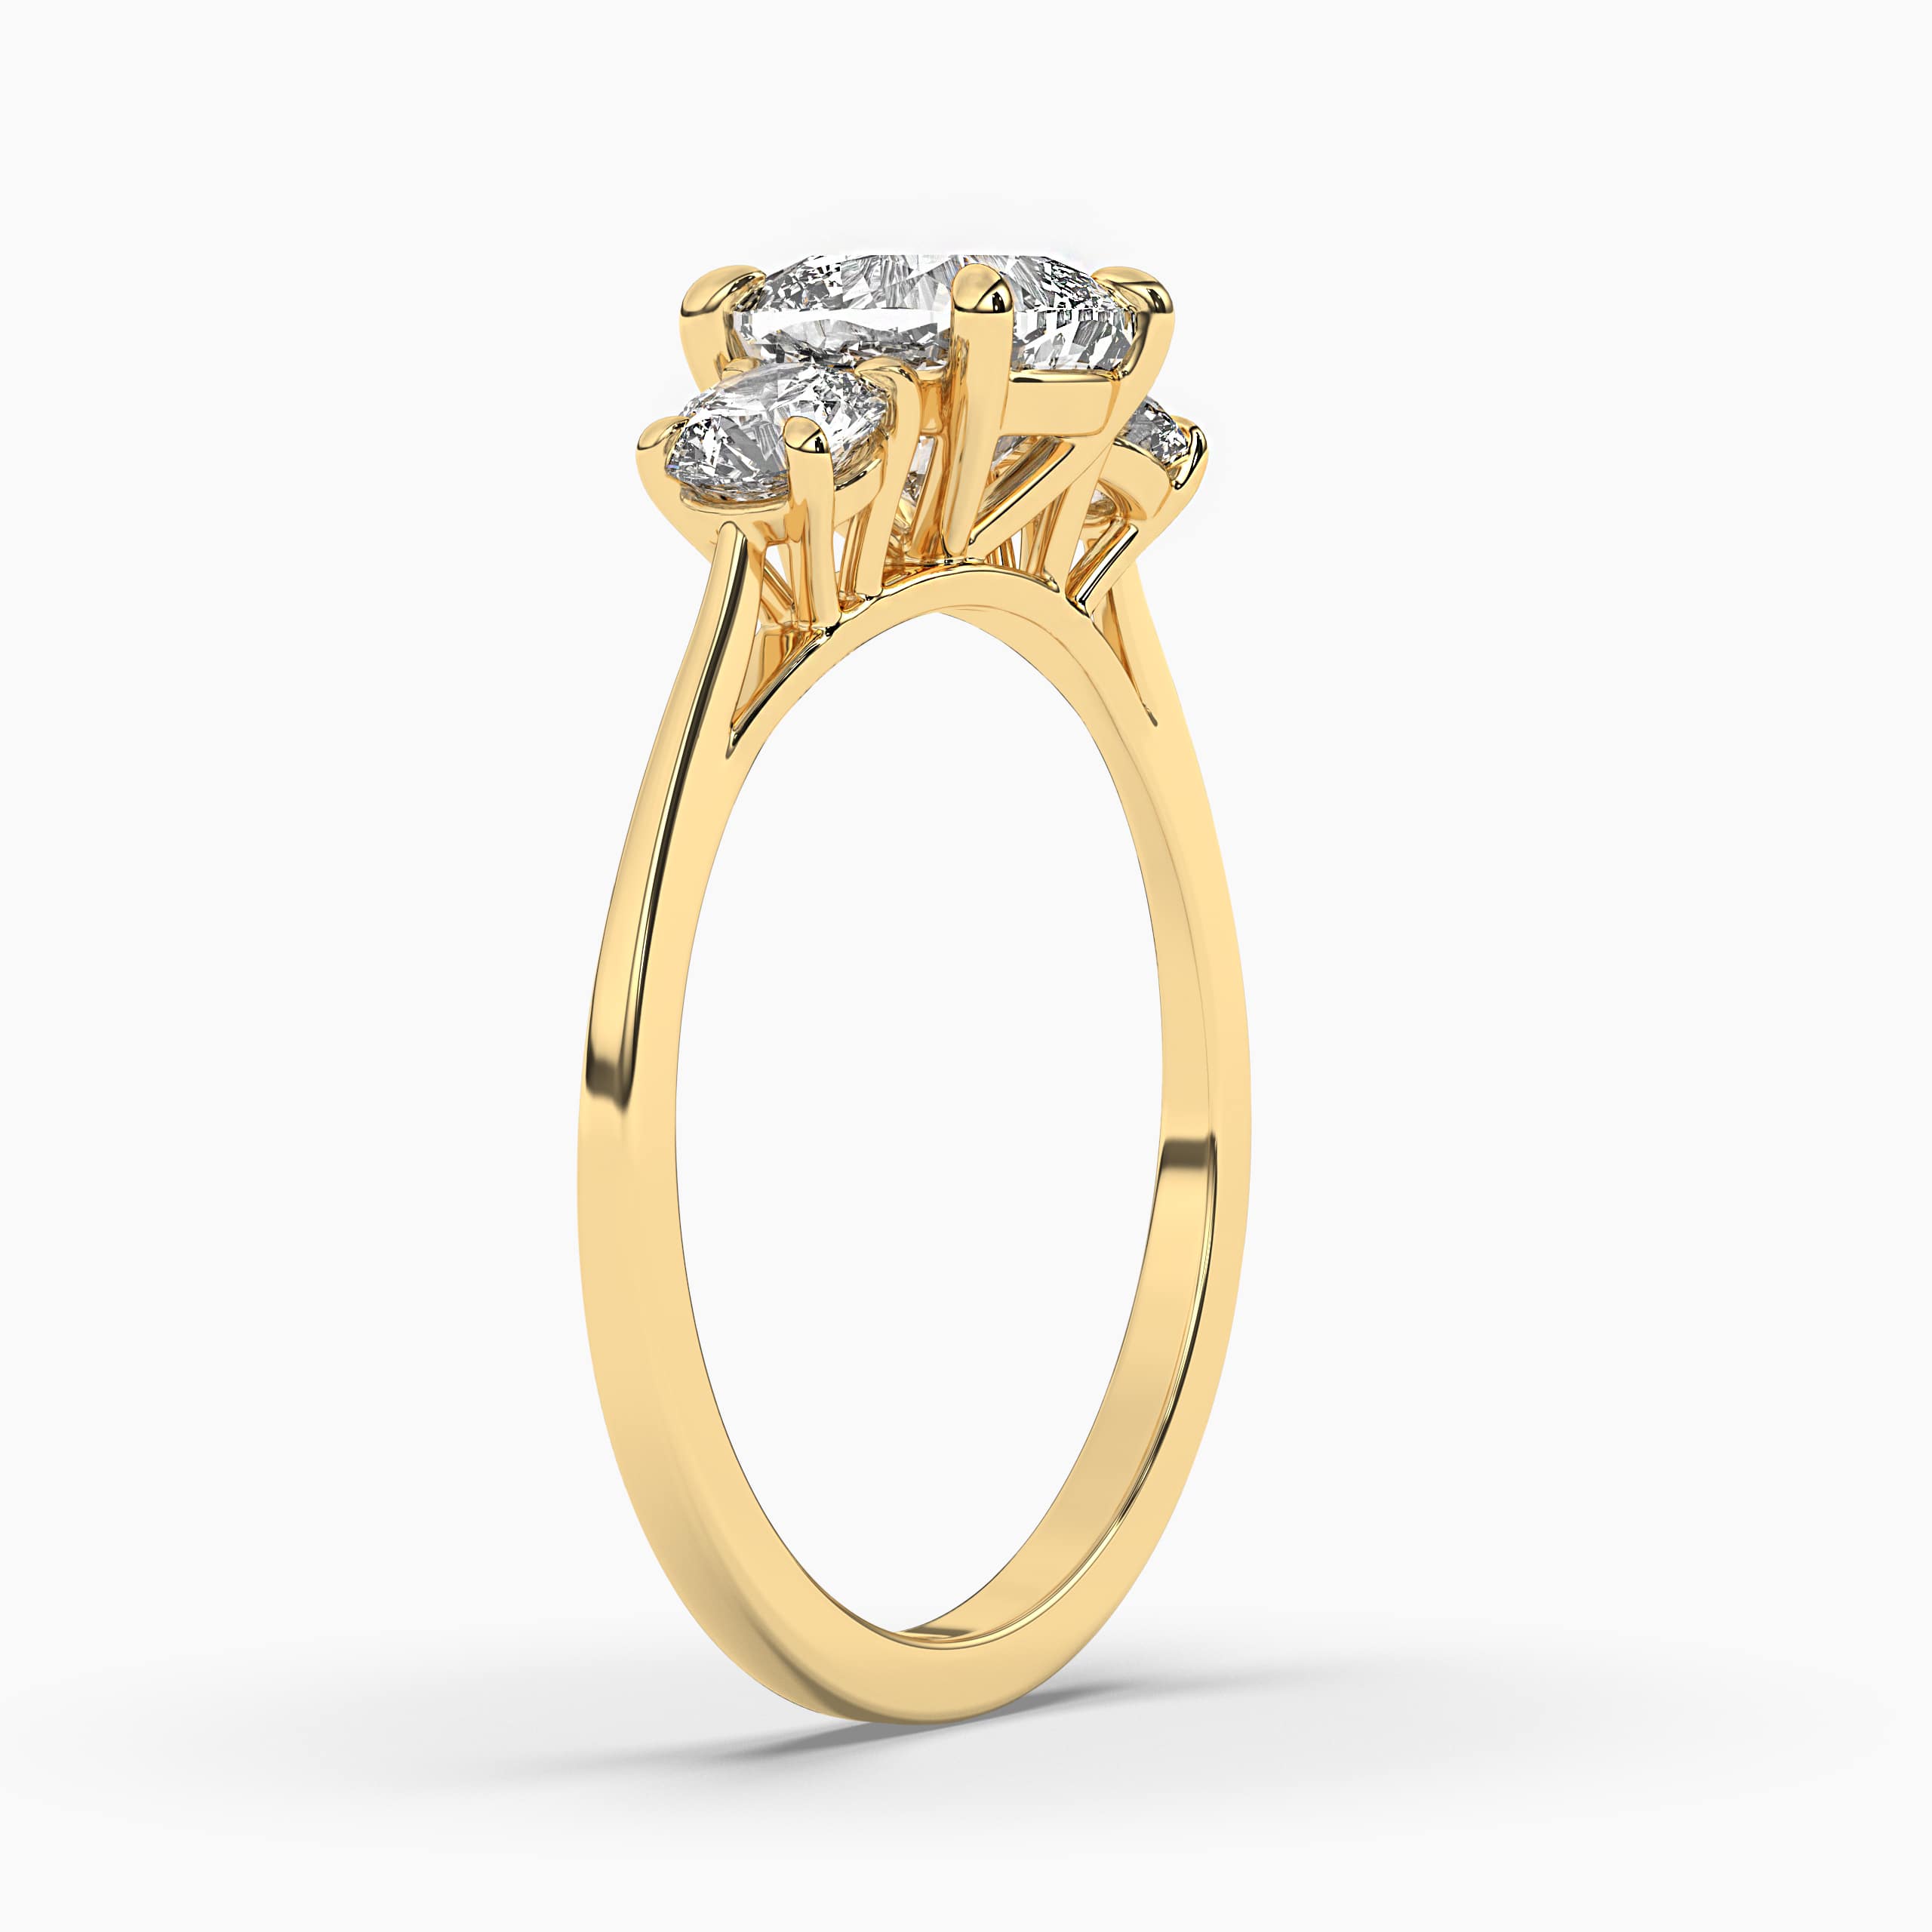 1.4 carat YELLOW GOLD ENGAGEMENT RING